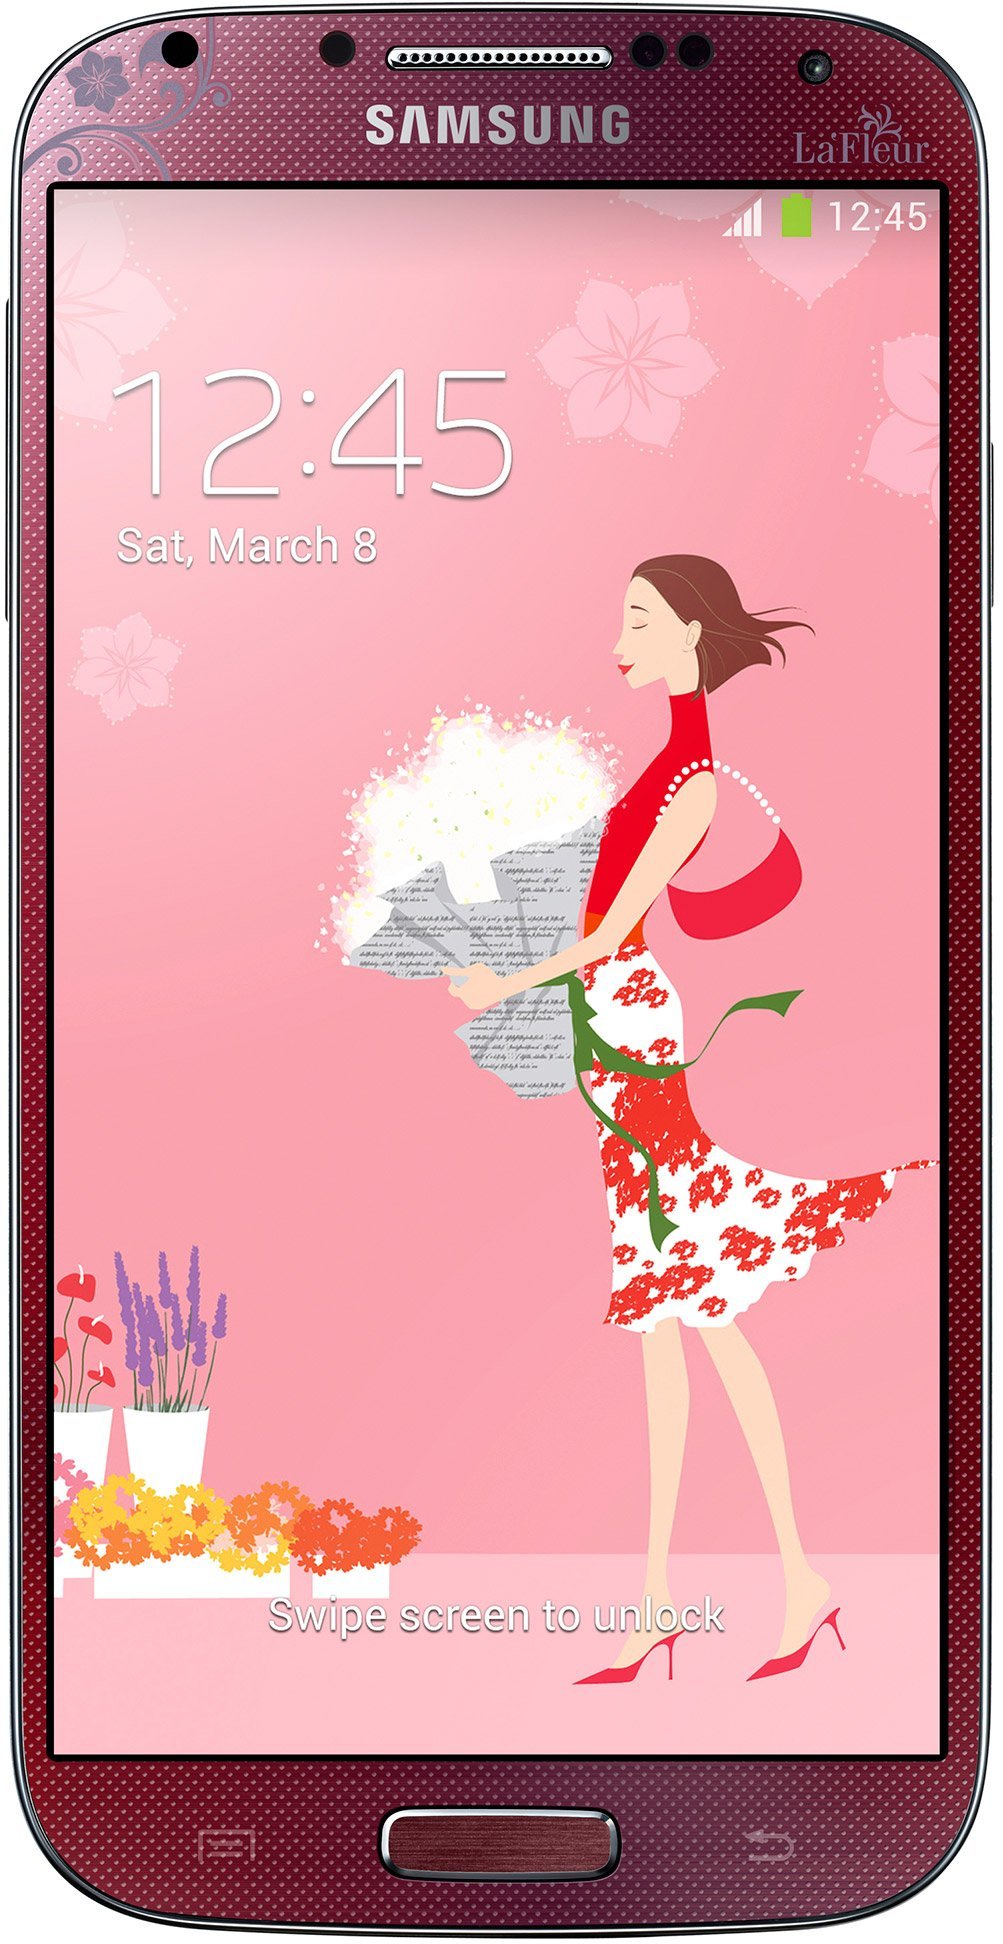 Телефон флер. Samsung Galaxy s4 la fleur. Samsung Galaxy s3 la fleur Red. Samsung s4 Mini la fleur. Samsung Galaxy la fleur s4 Duos.